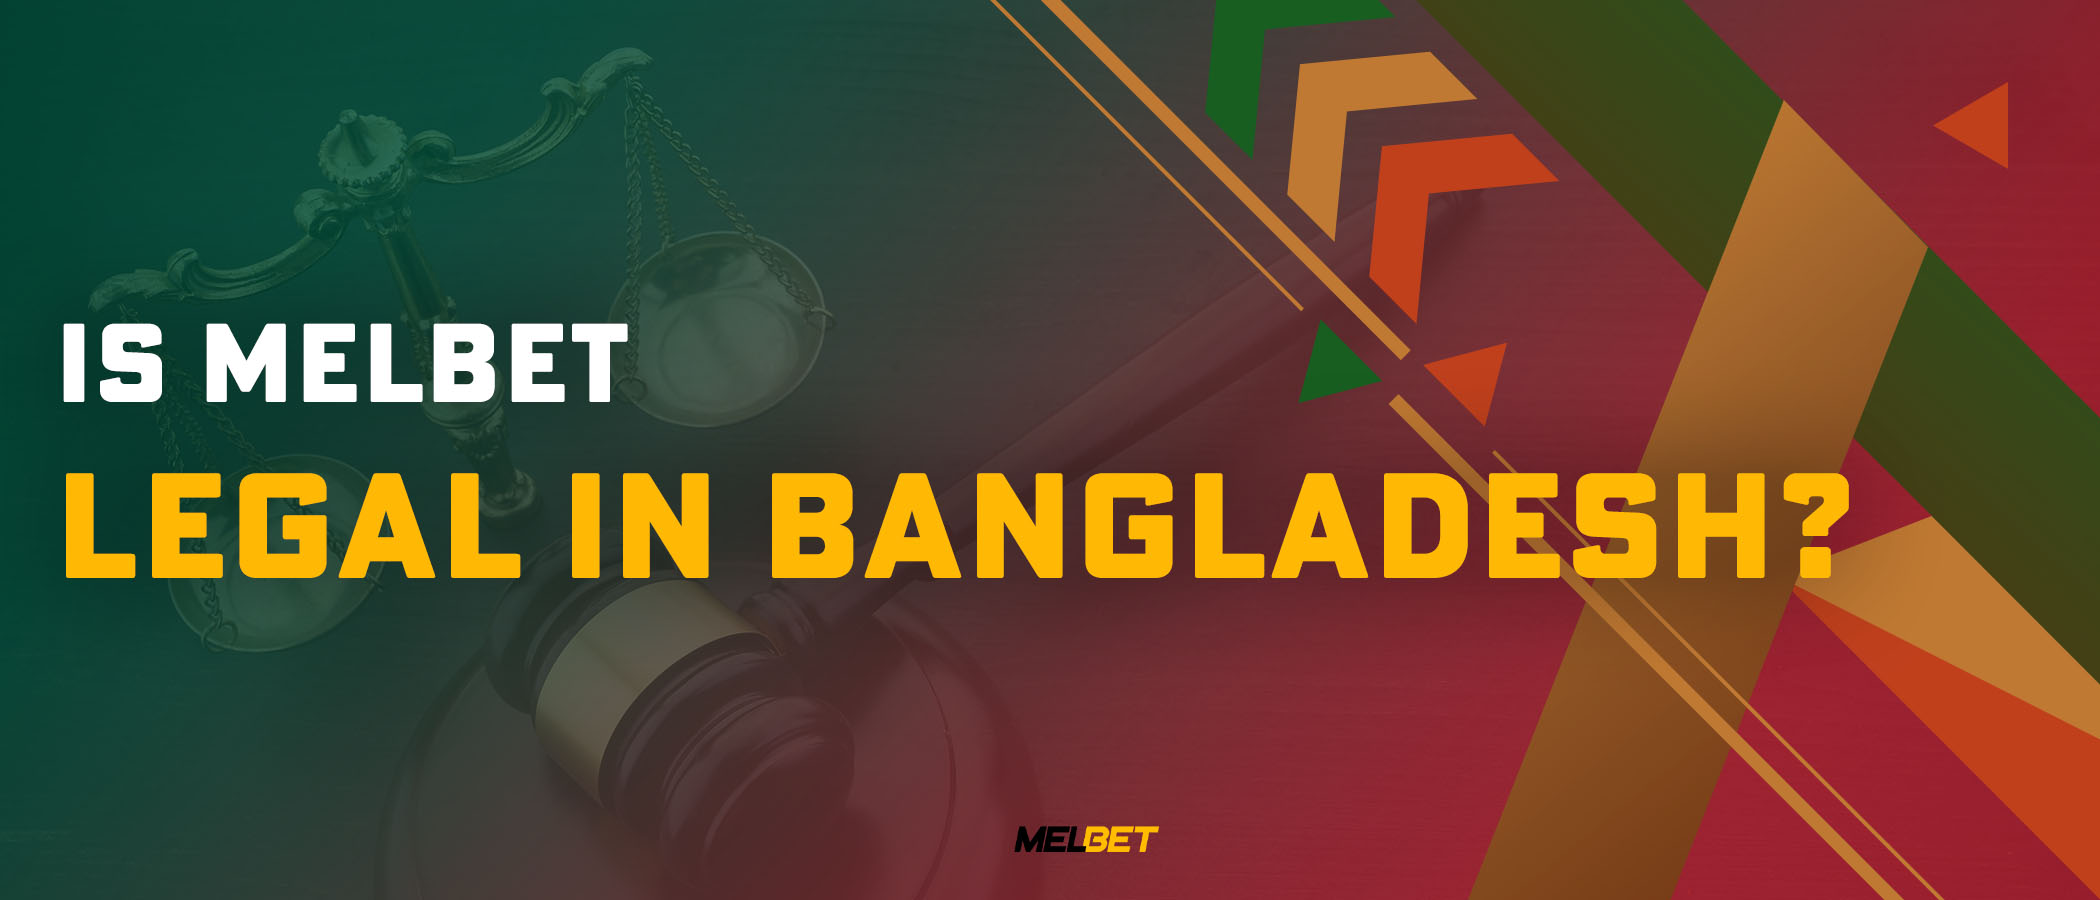 Is Melbet legal in Bangladesh